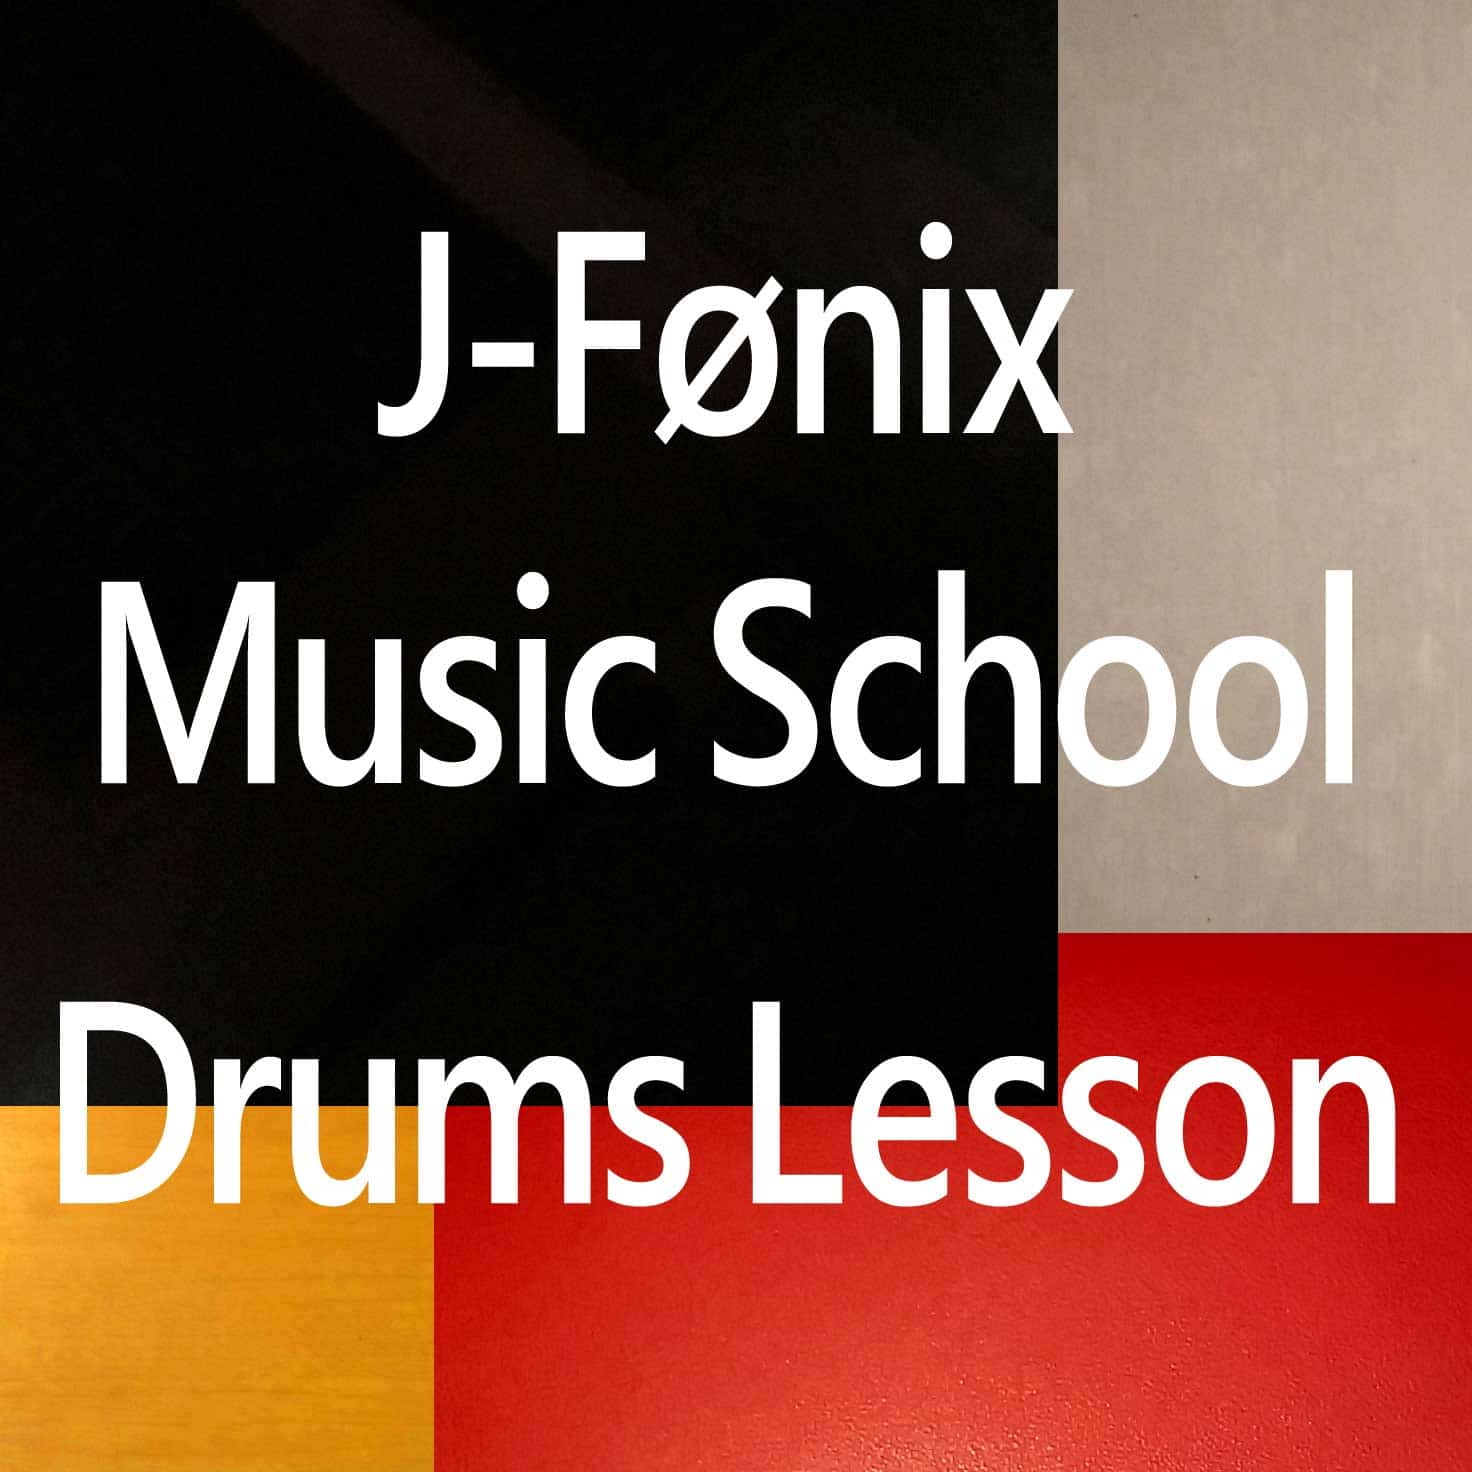 J-Fenix Music School Drums Lesson教室イメージ